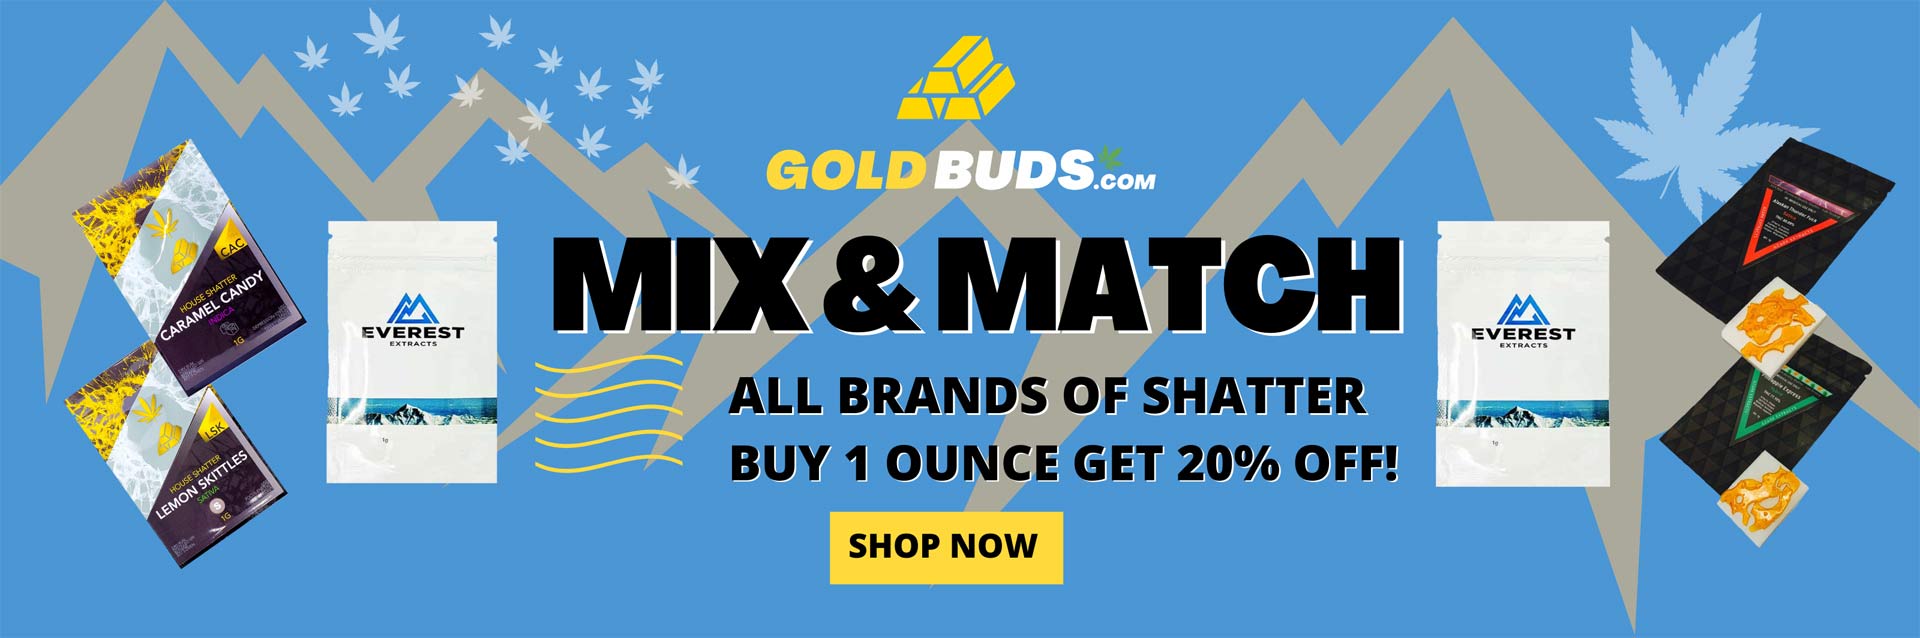 Goldbuds Mix and Match Shatter